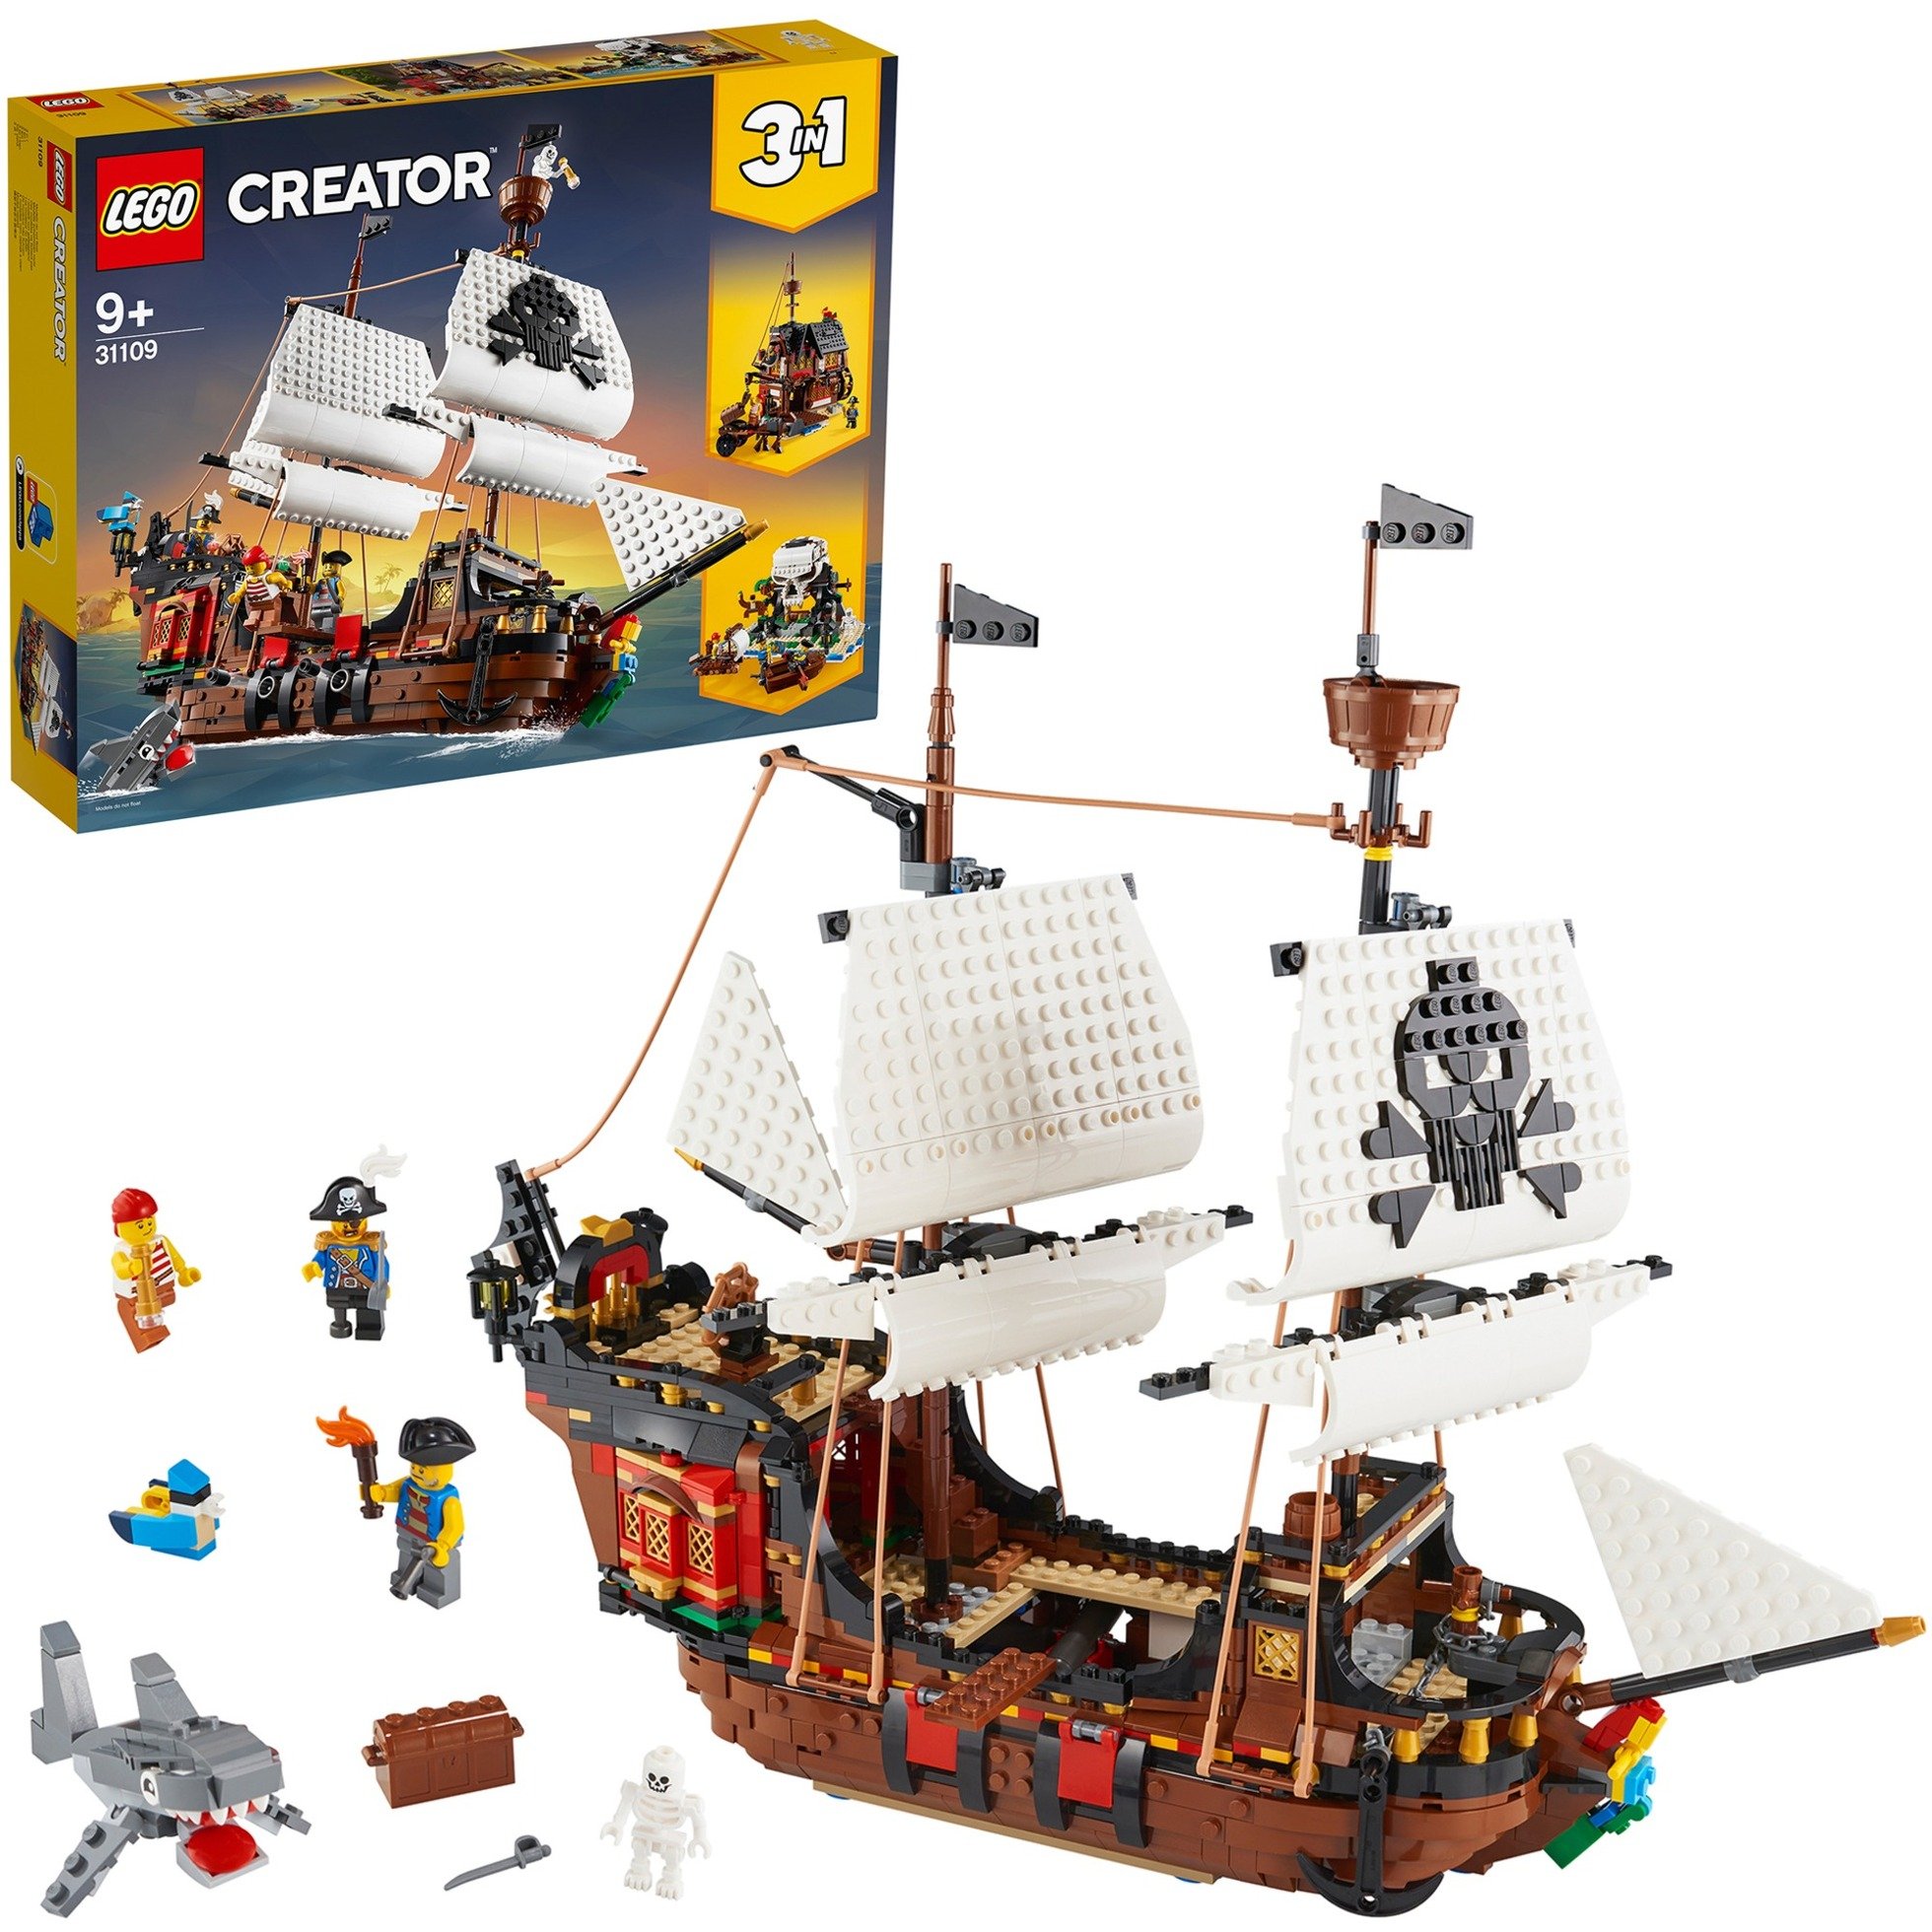 Spielzeug: Lego 31109 Creator Piratenschiff